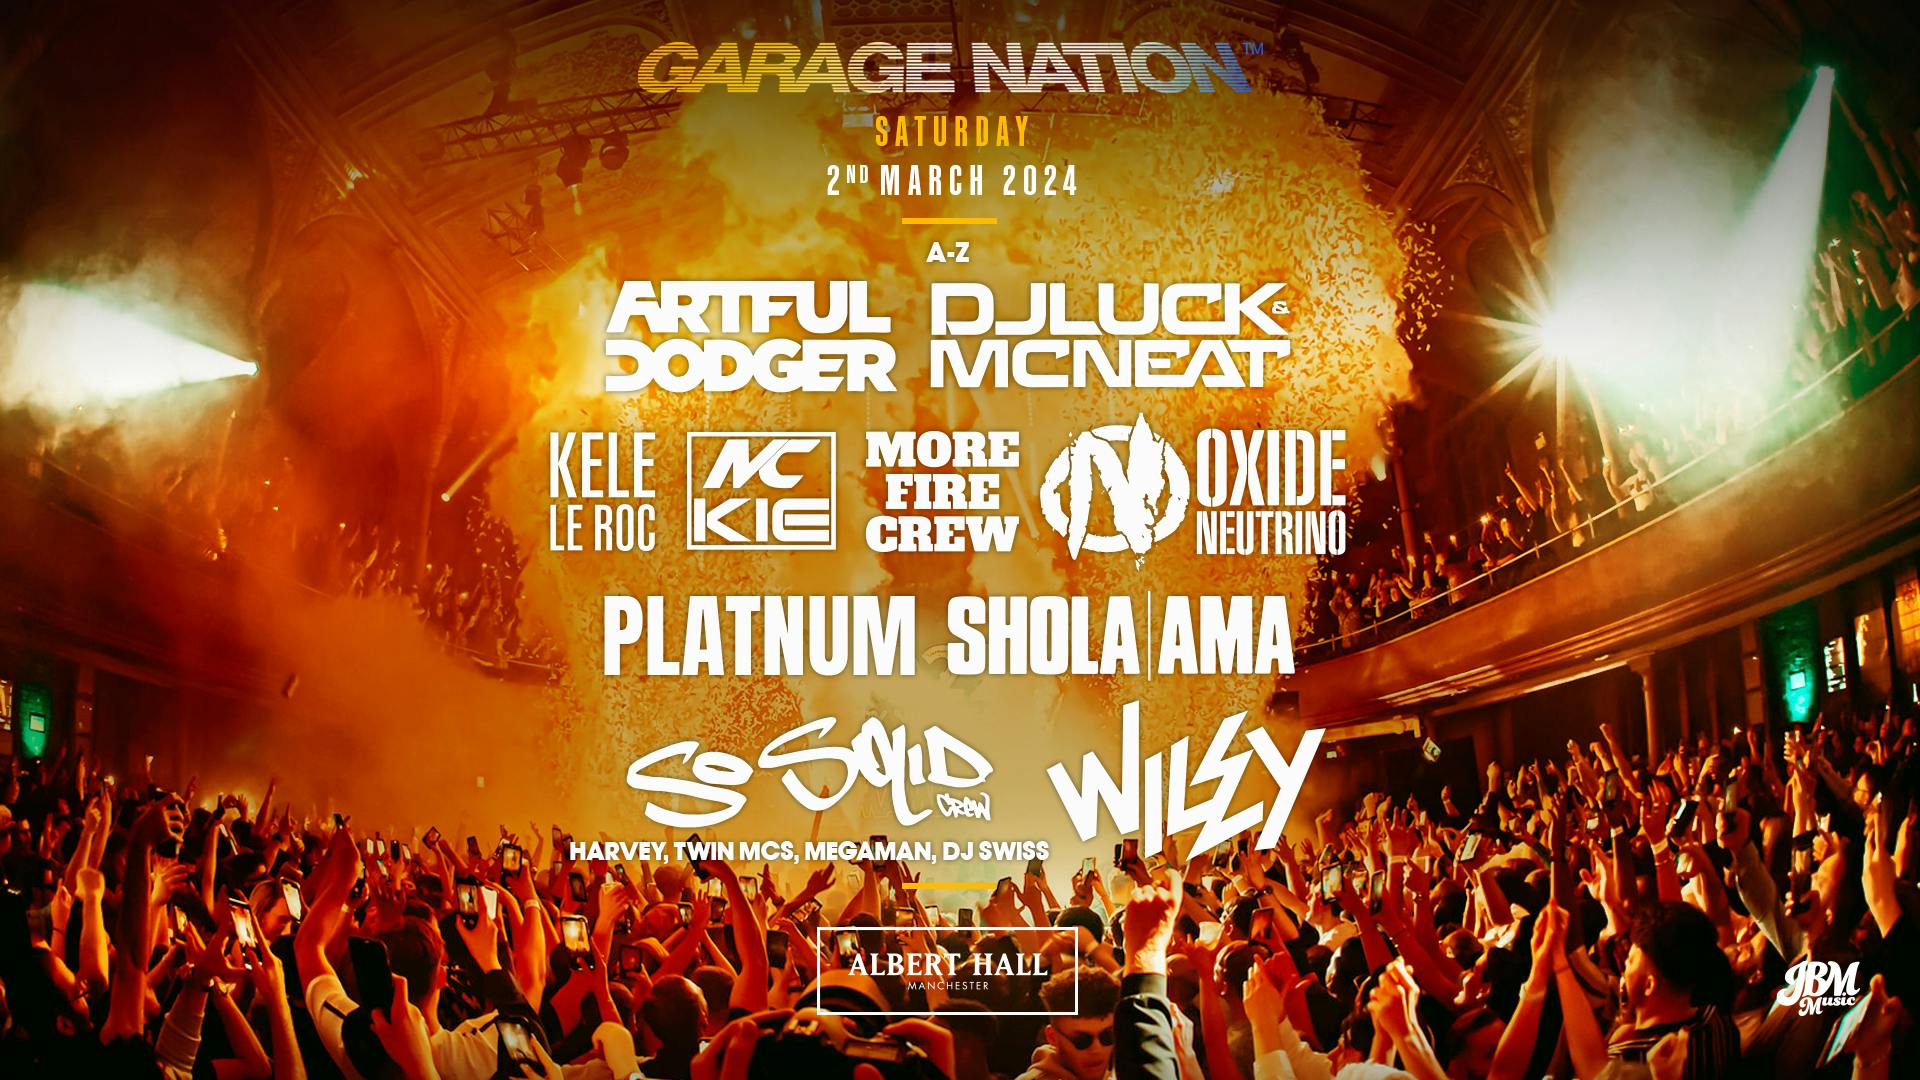 Garage Nation: Wiley, The Artful Dodger, DJ Luck & MC Neat, Kele Le Roc, MC KIE, More Fire Crew, Oxide & Neutrino + more